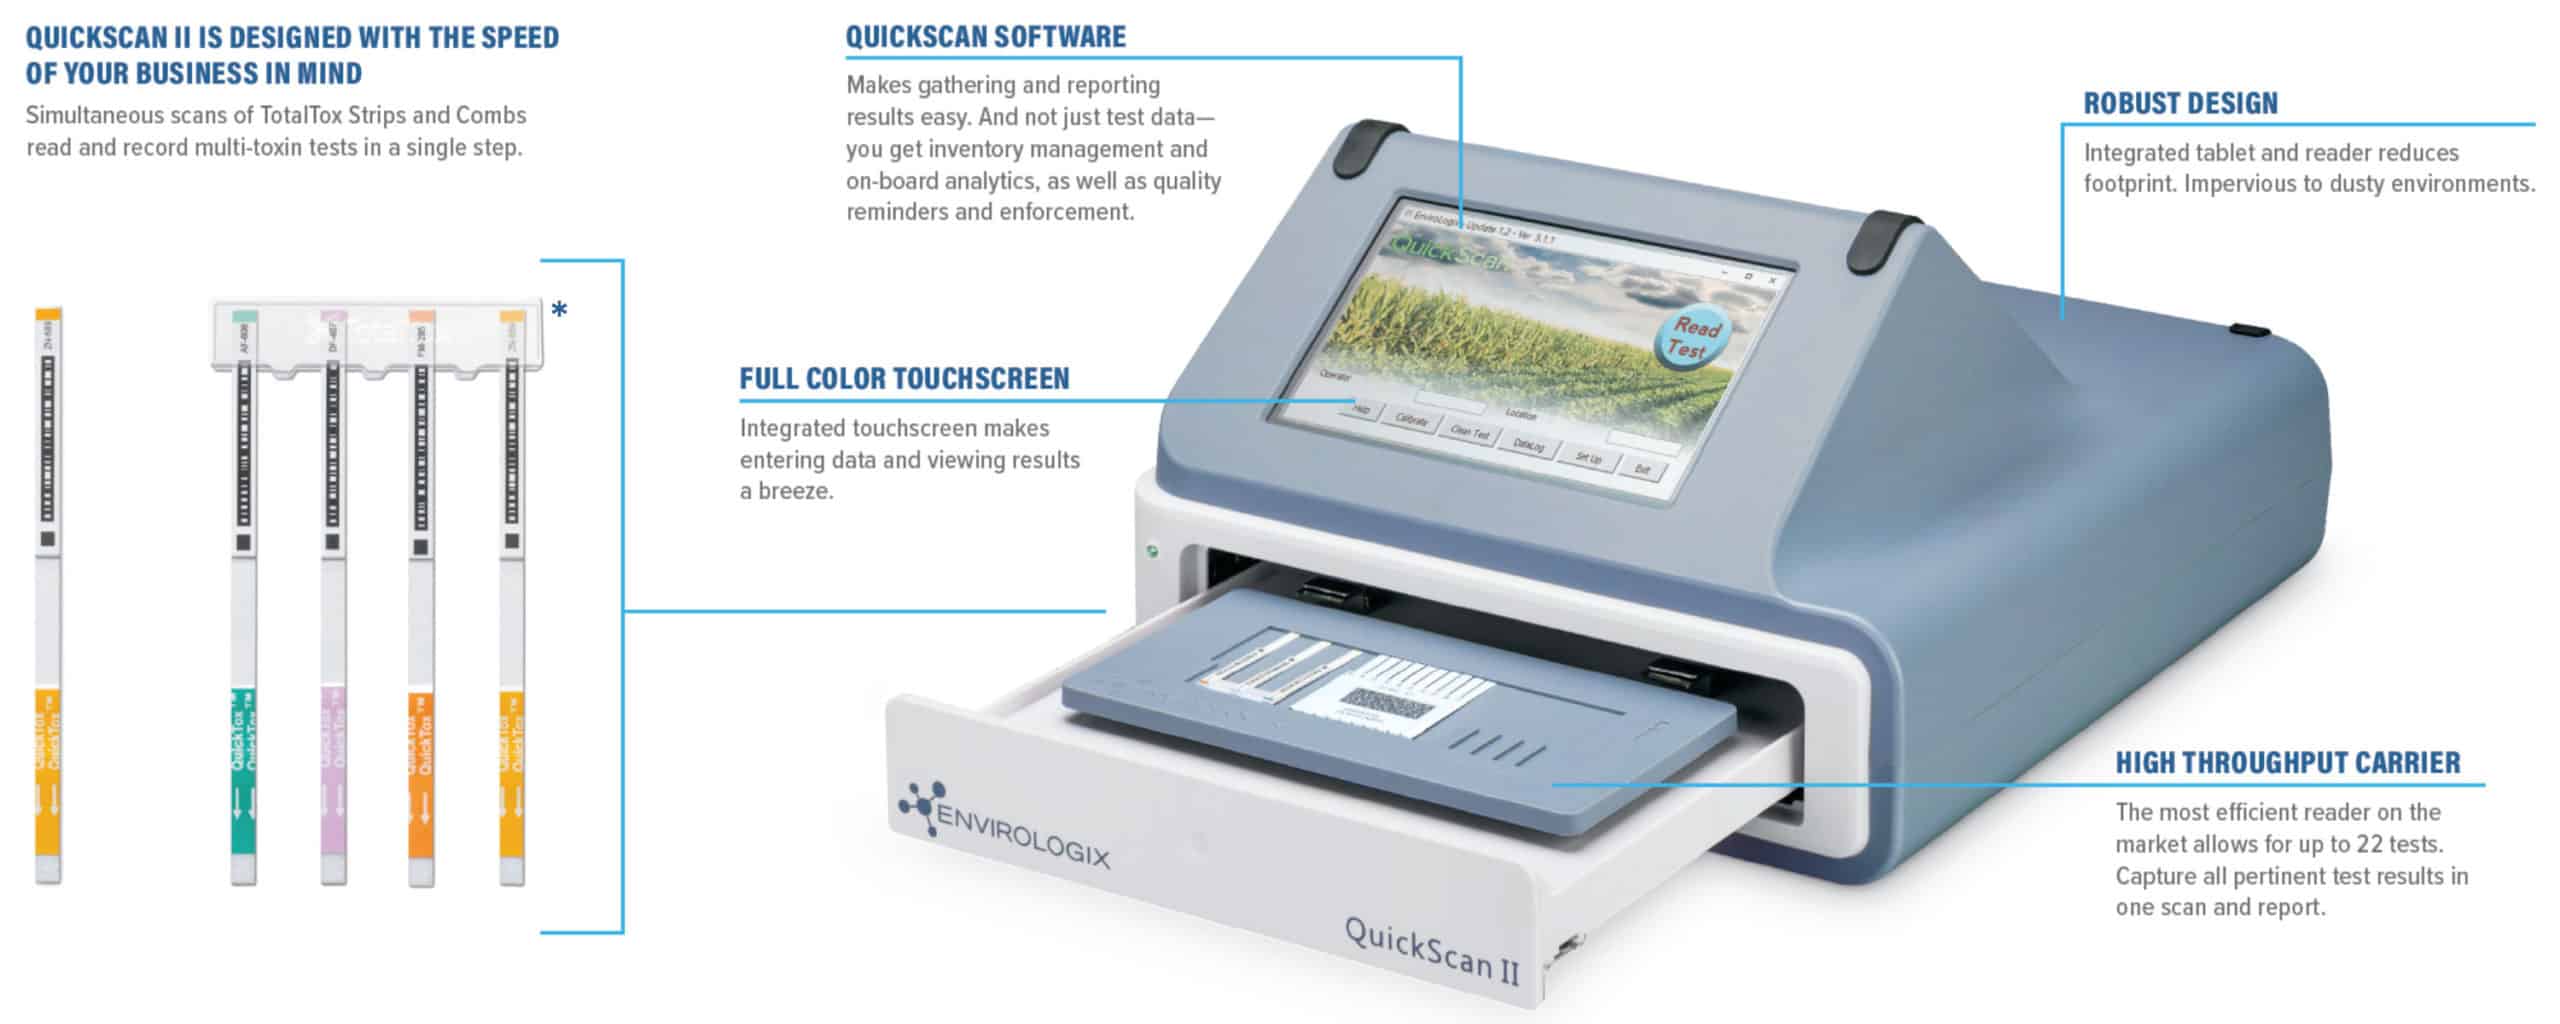 QuickScan II and QuickScan software enhance the efficiency of TotalTox